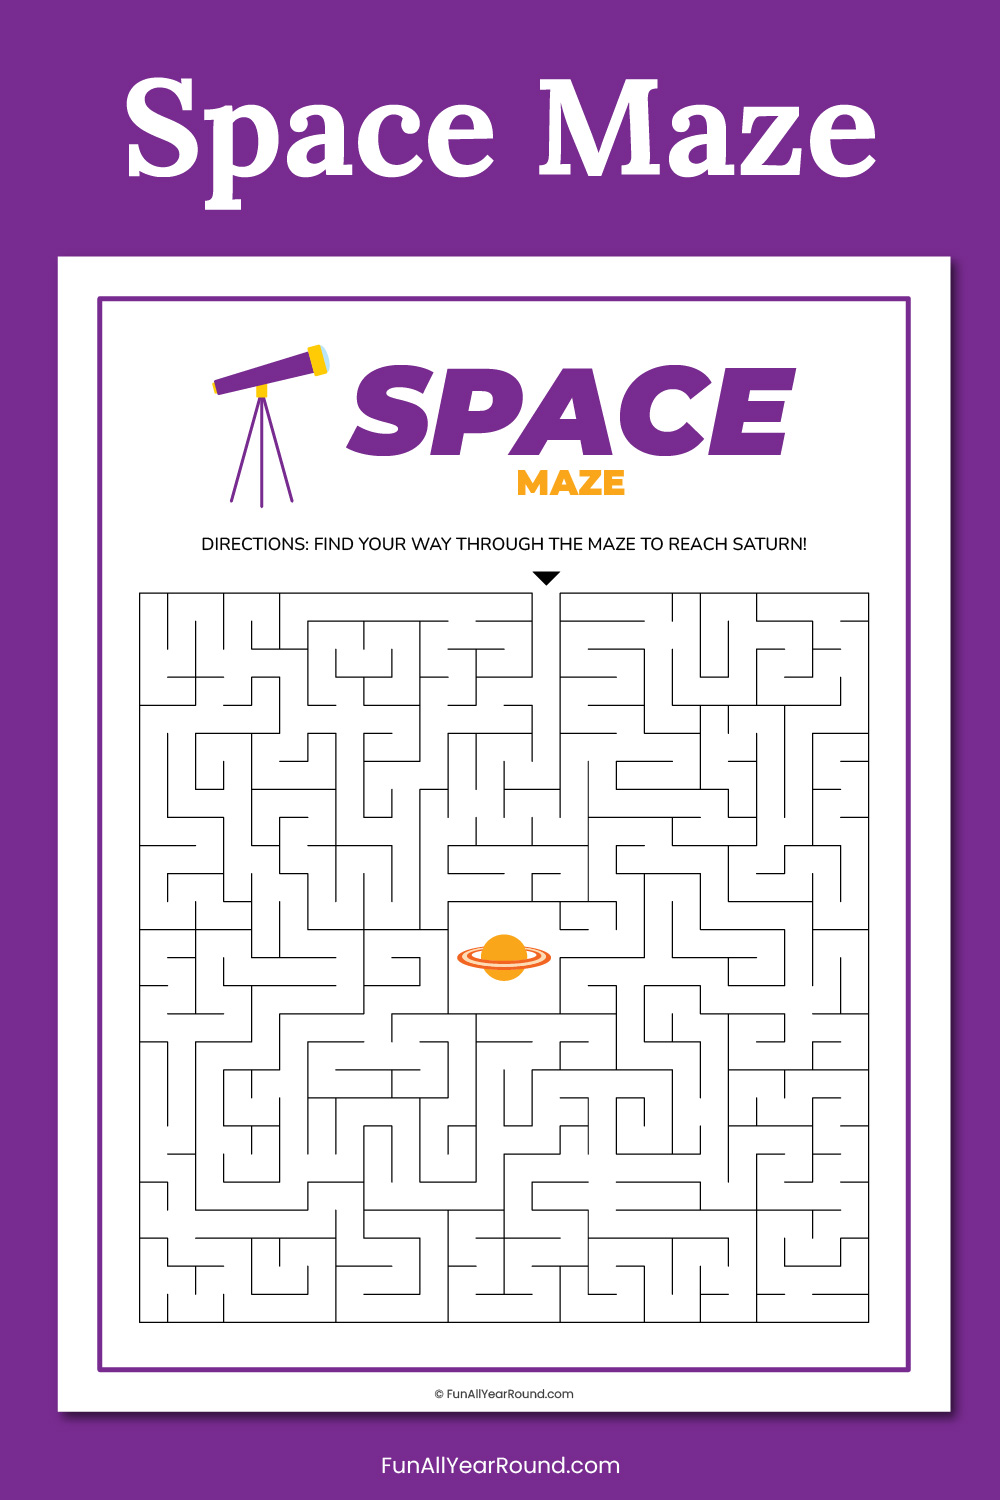 Space maze